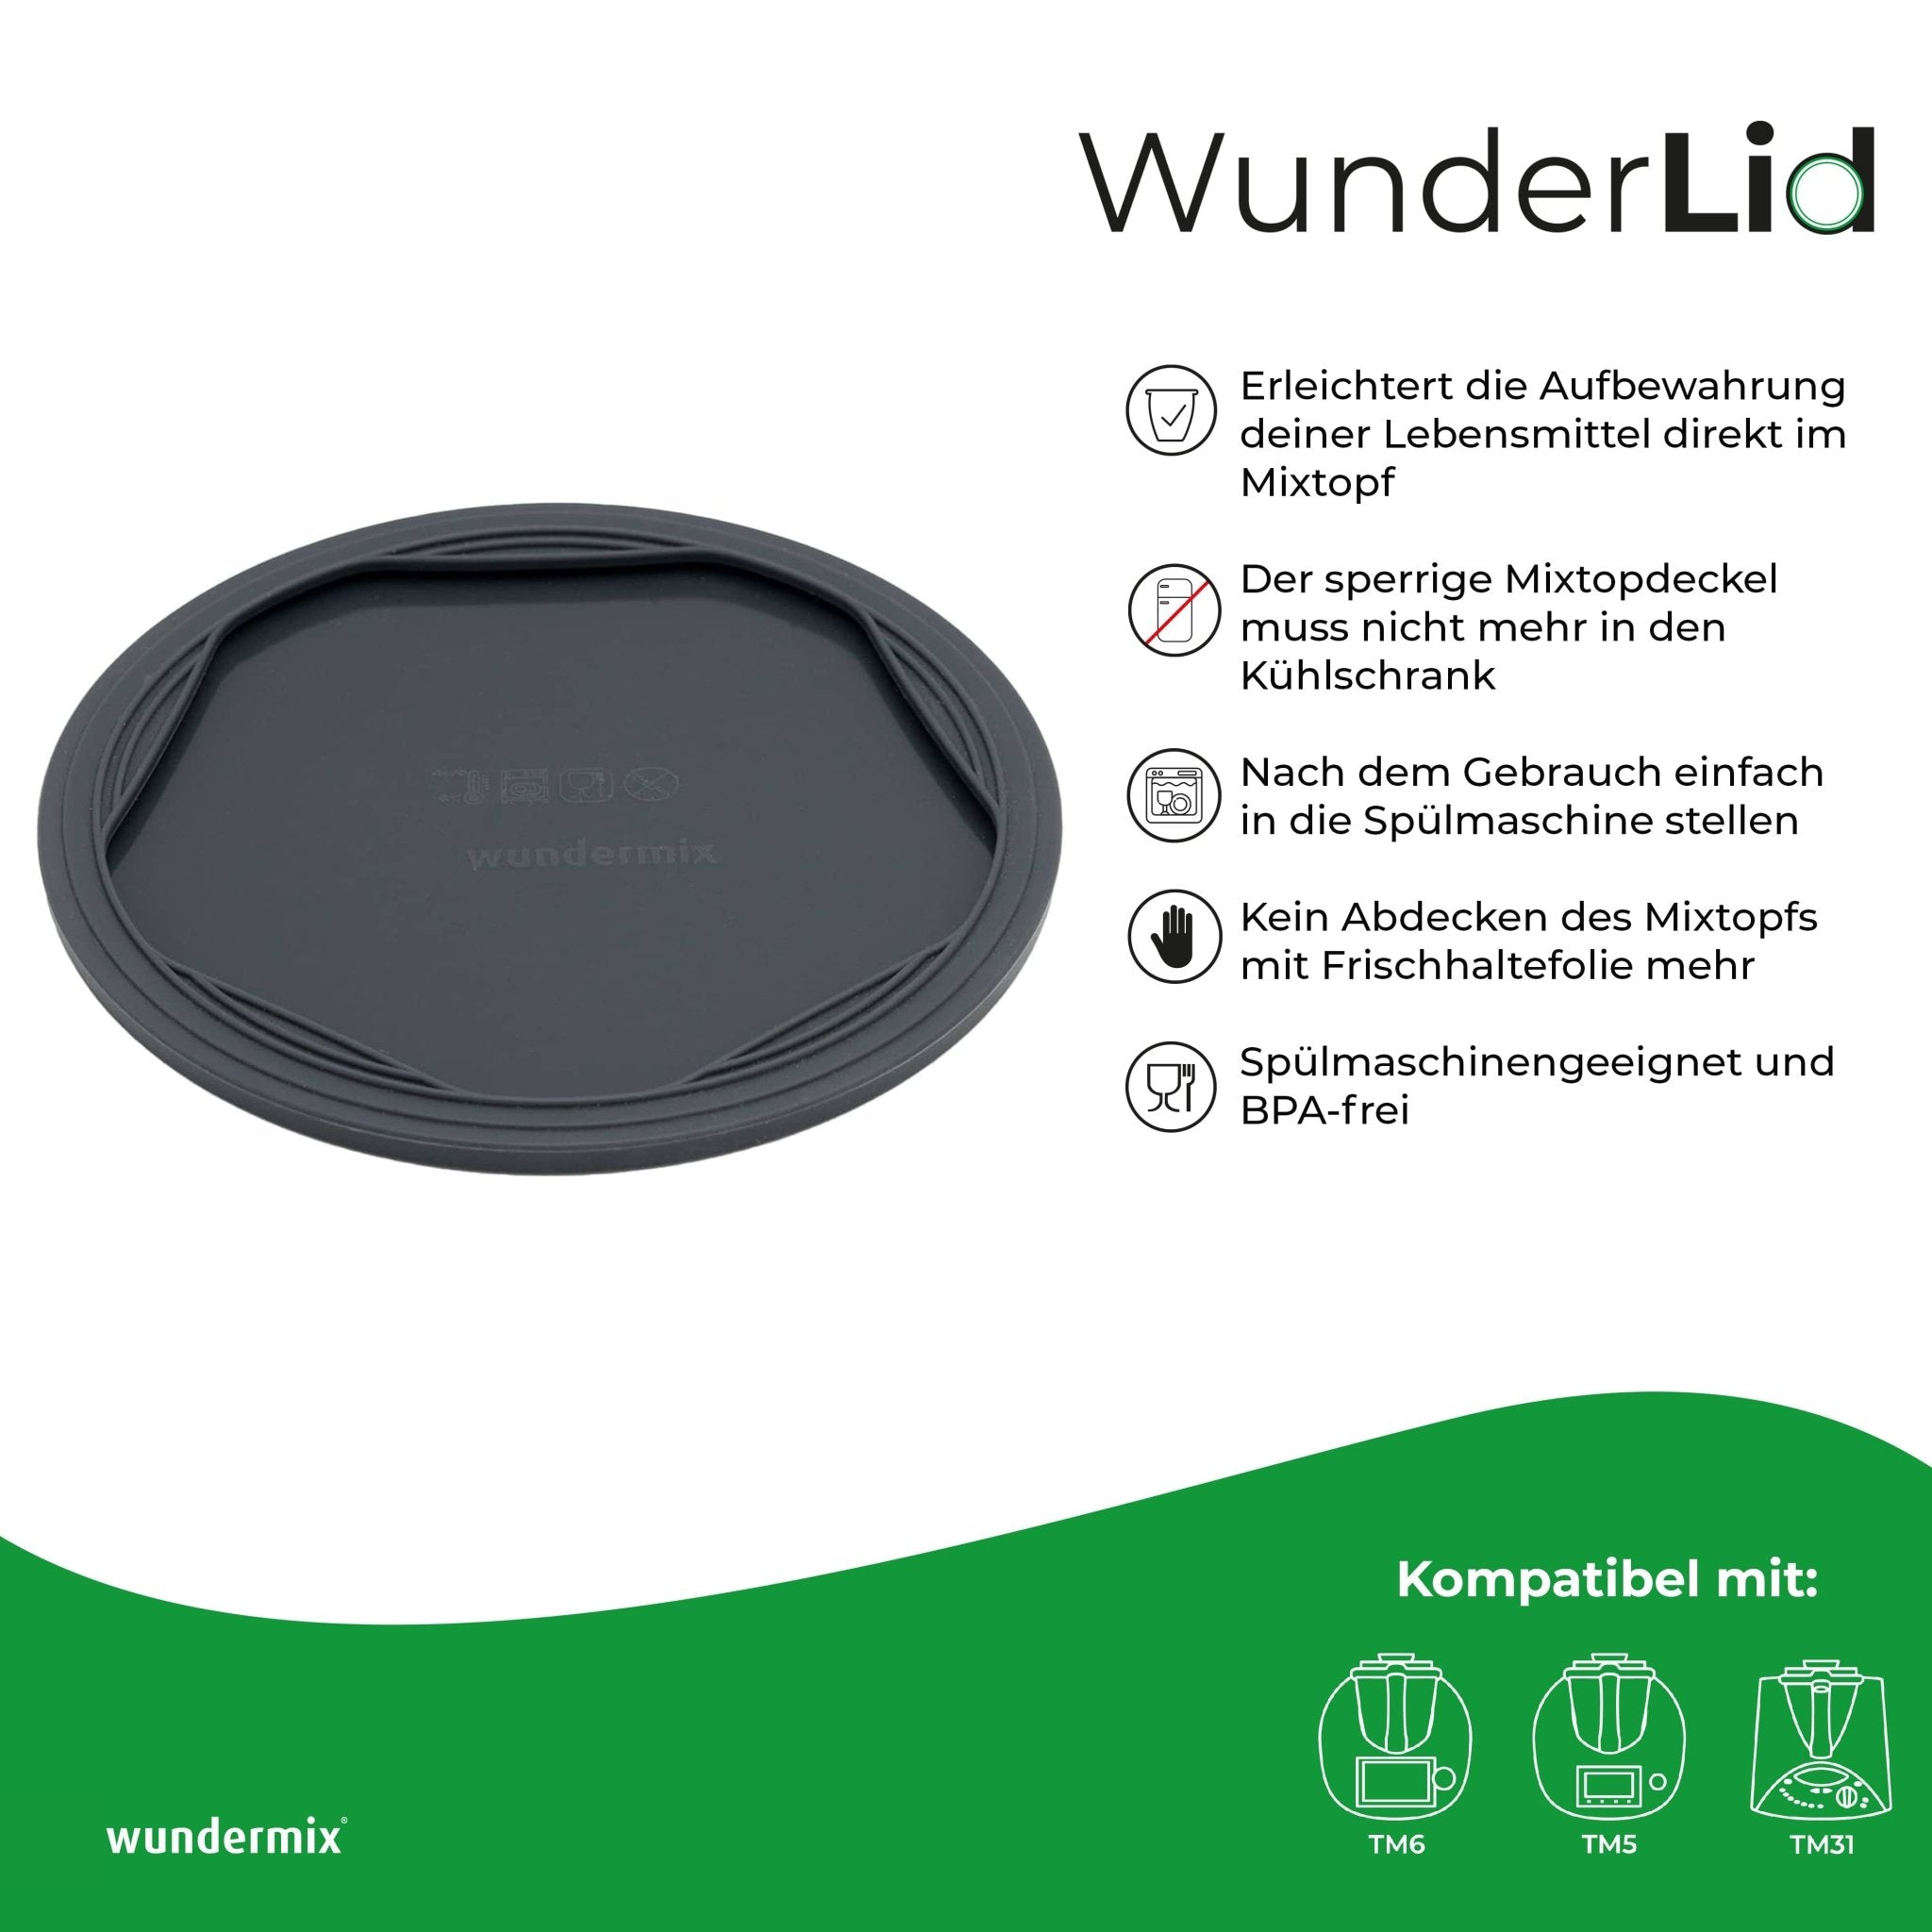 WunderLid | Silikondeckel für Thermomix-Mixtopf TM6, TM5, TM31 - Wundermix GmbH